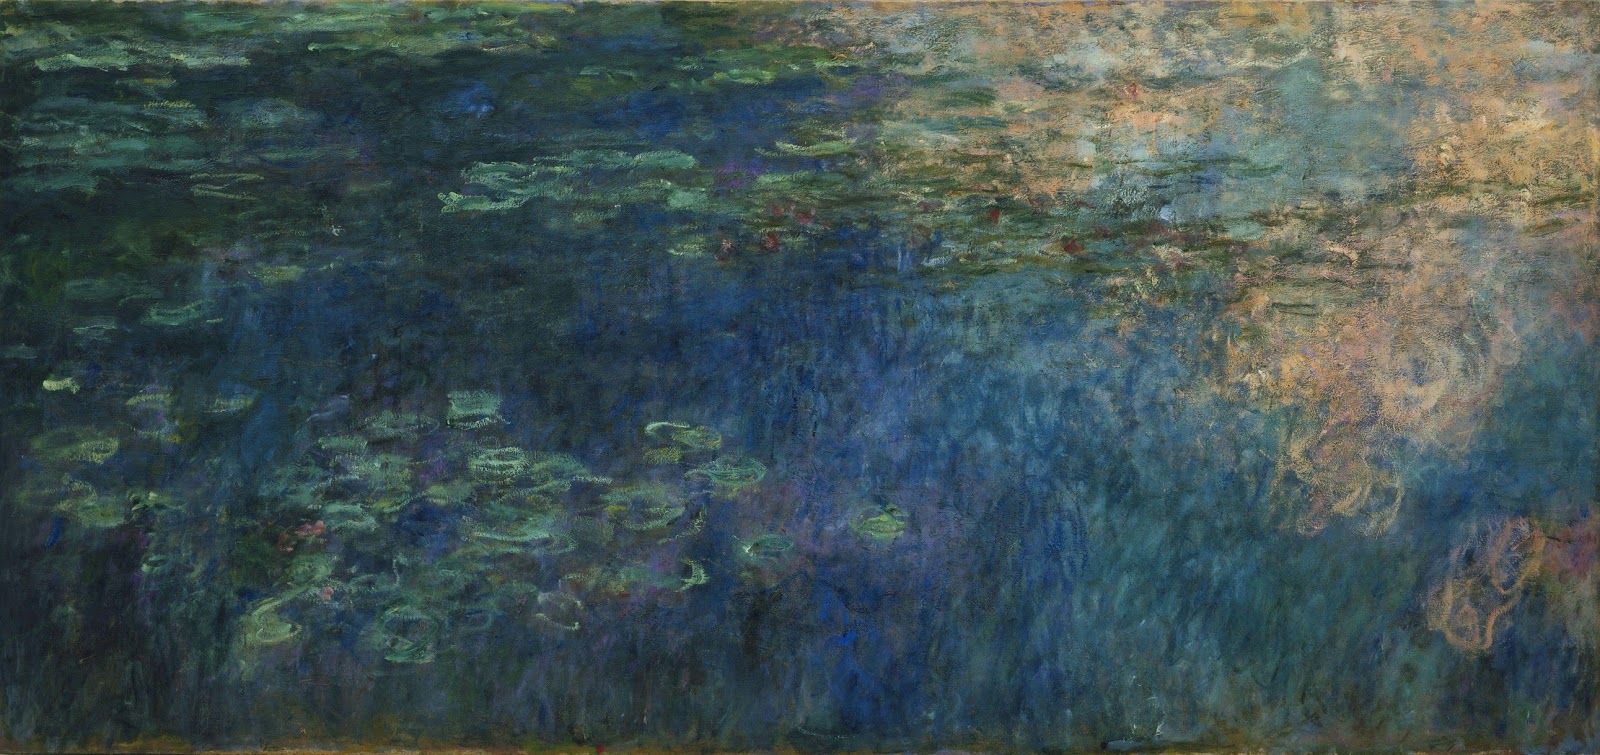 Claude+Monet-1840-1926 (605).jpg